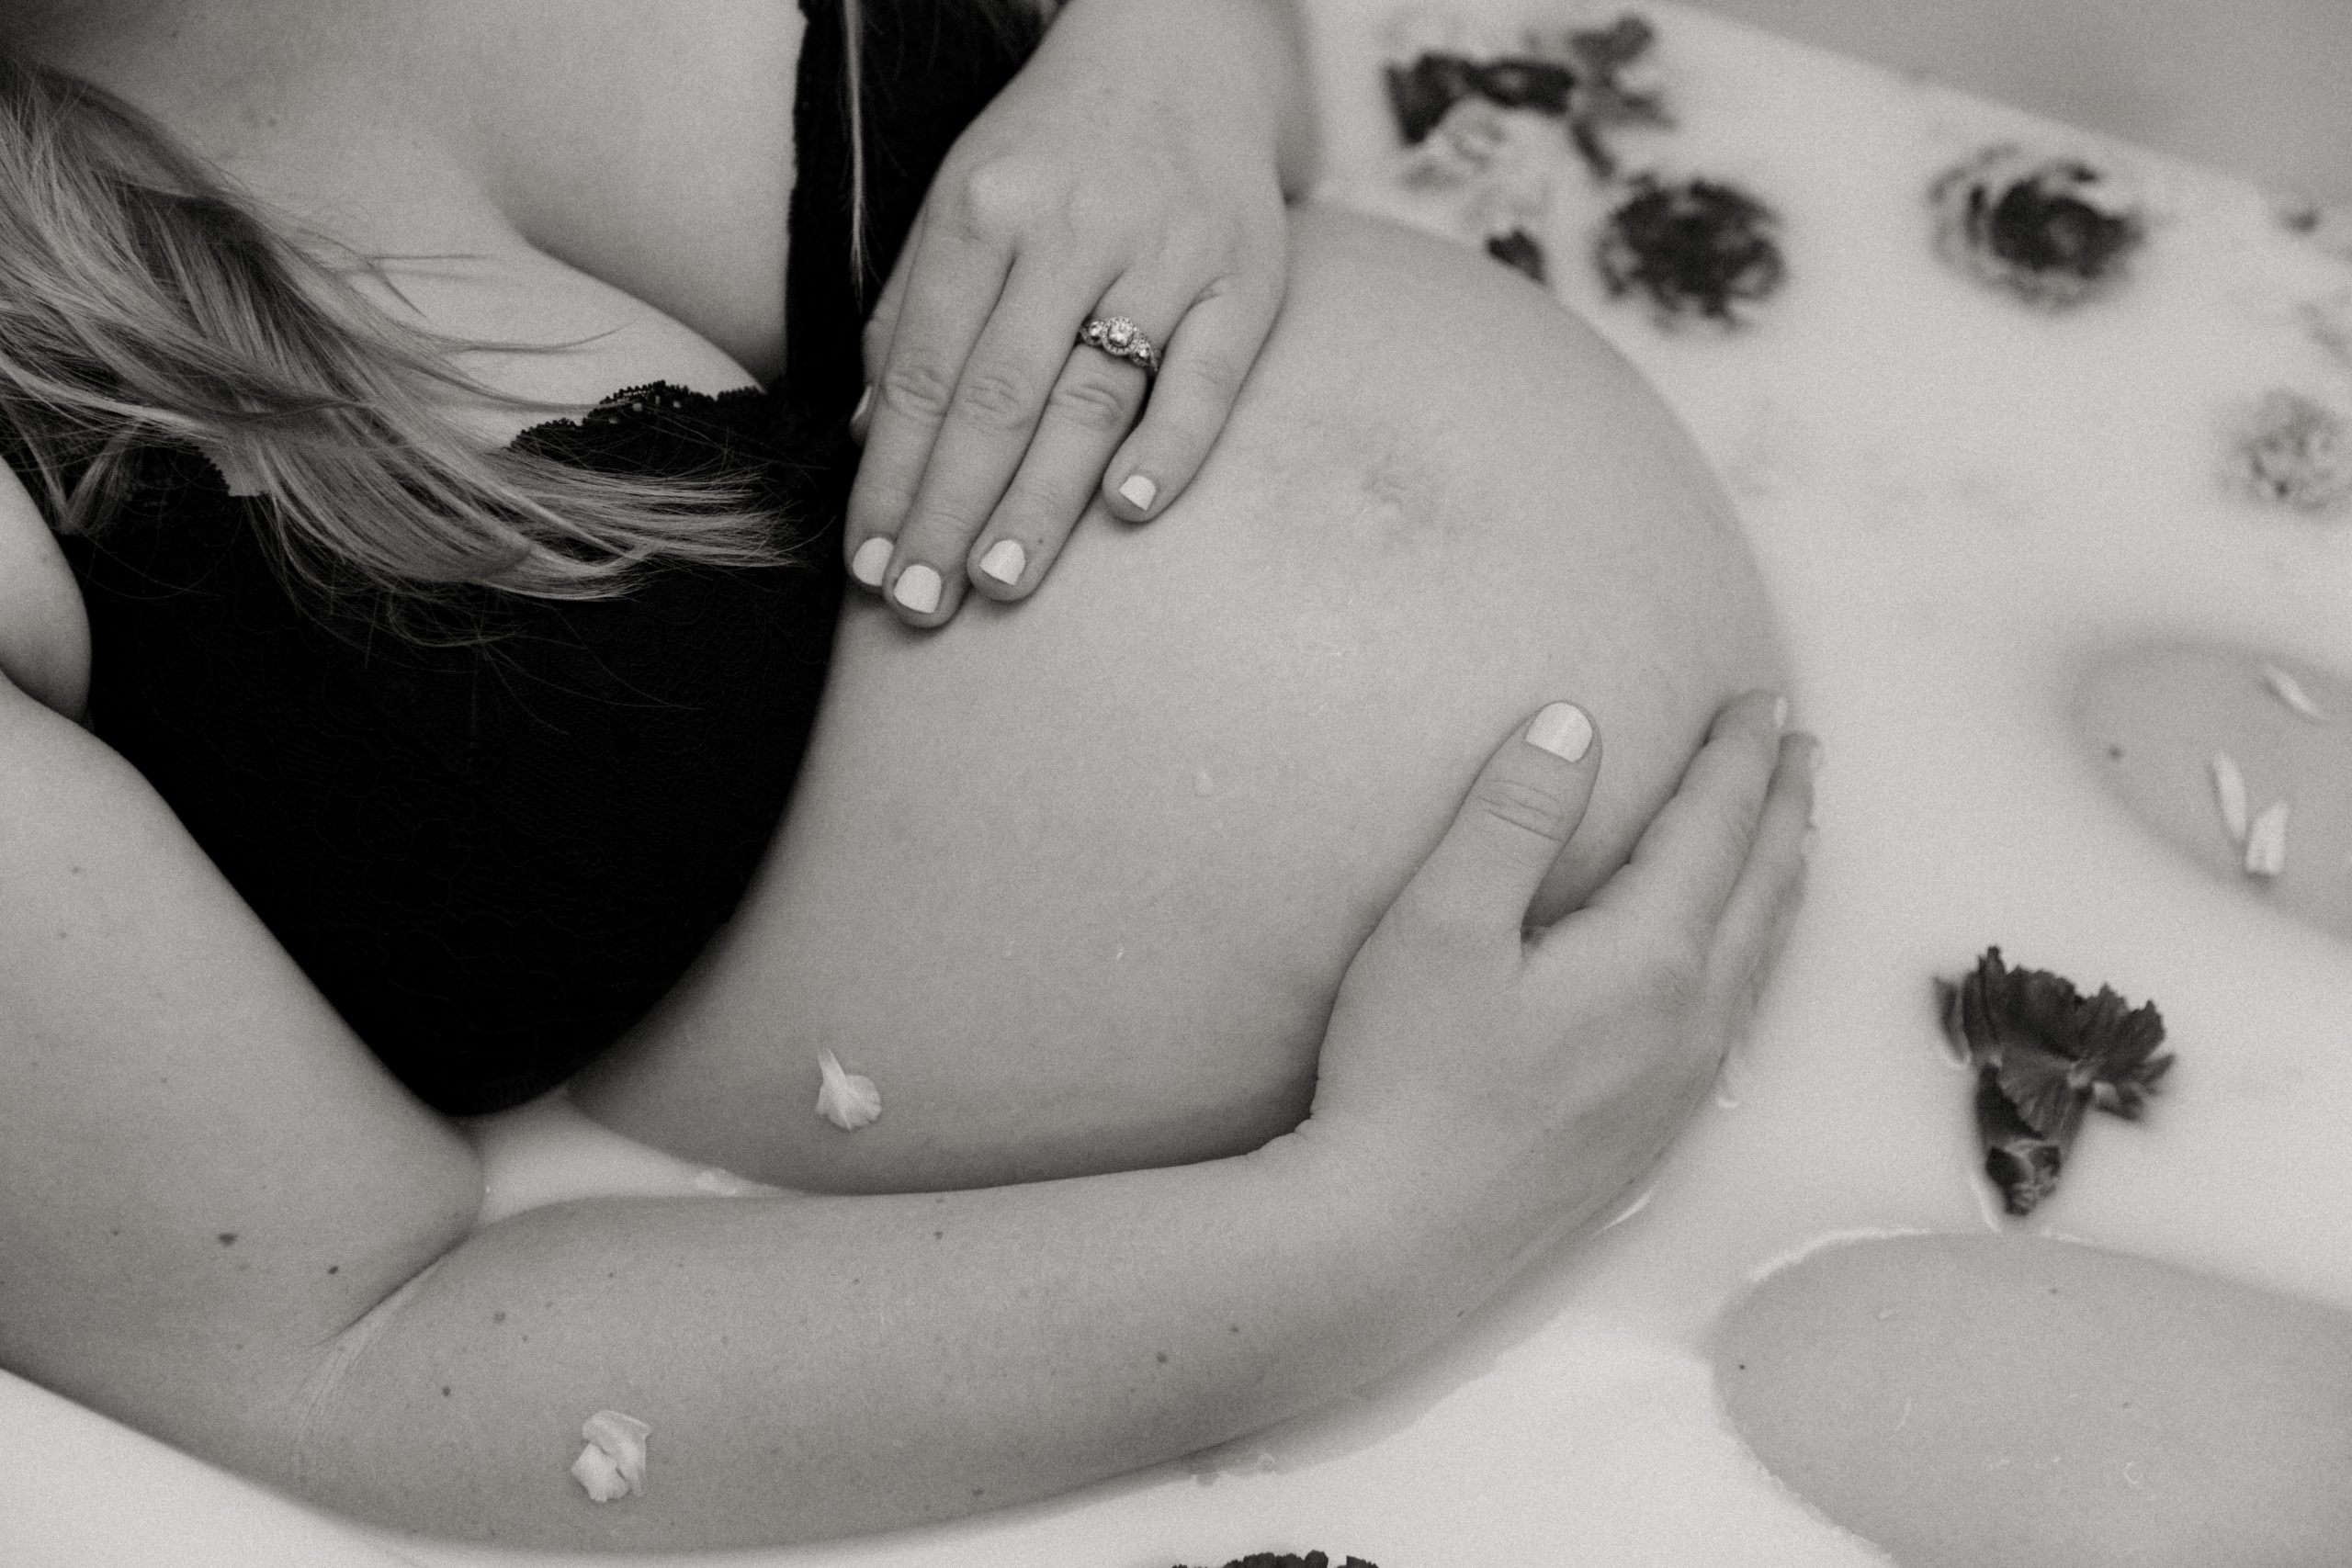 milk bath maternity photography